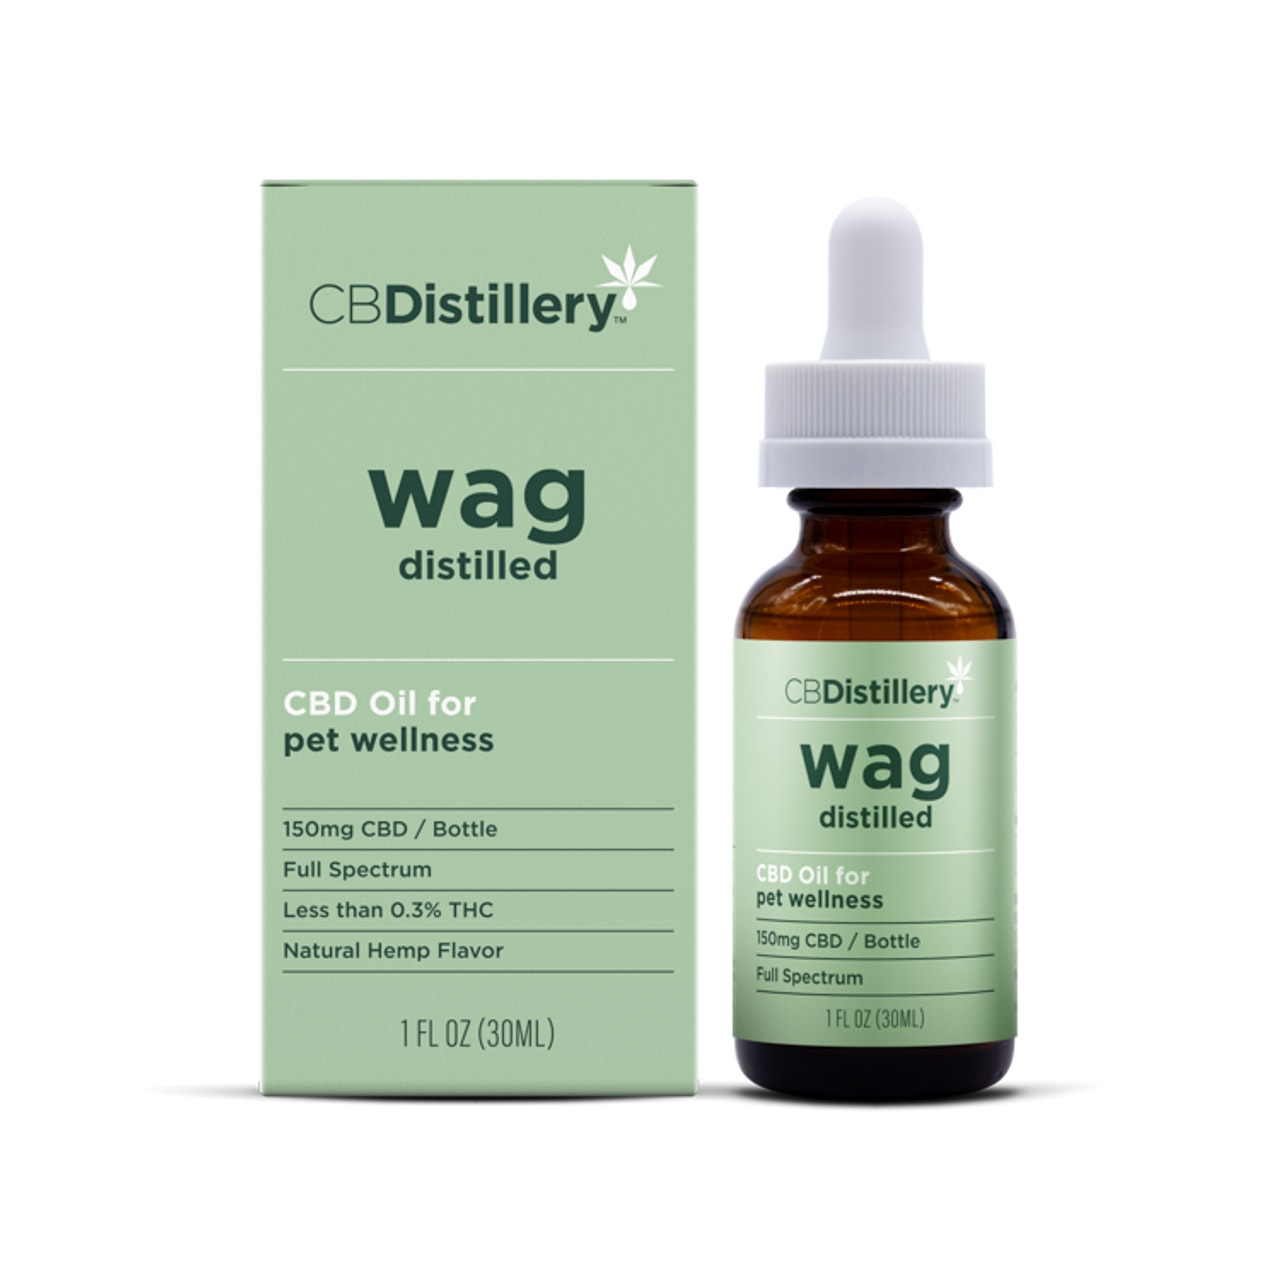 CBDistillery, Wag Distilled CBD Oil For Pet Wellness, Full Spectrum, 1oz, 150mg CBD